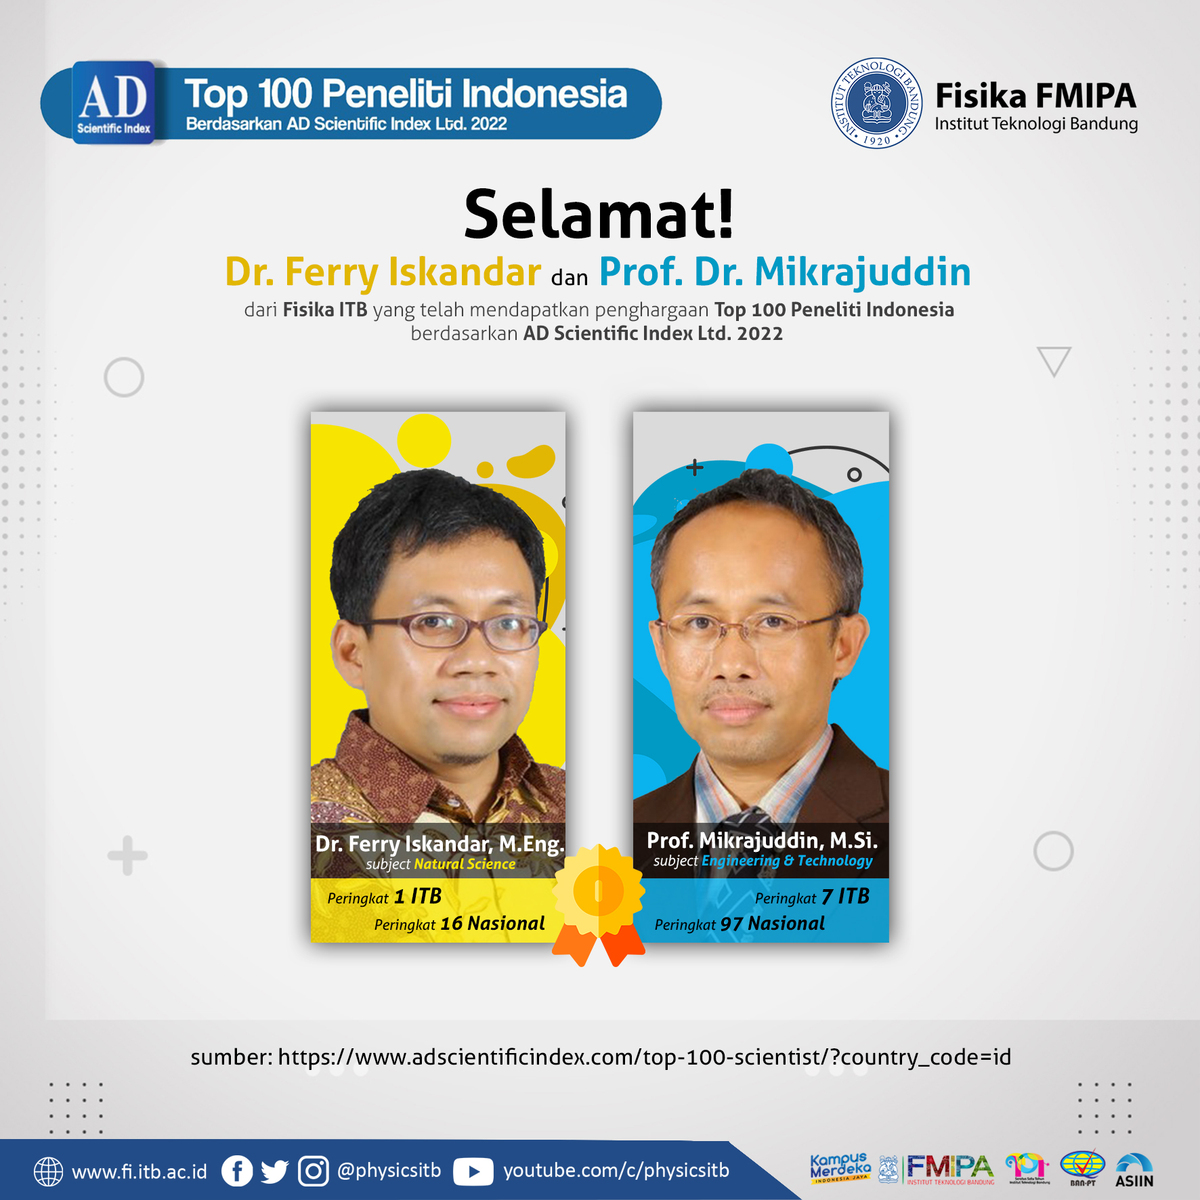 Selamat kepada Dr. Ferry Iskandar dan Prof. Dr. Mikrajuddin meraih penghargaan Top 100 Peneliti Indonesia!